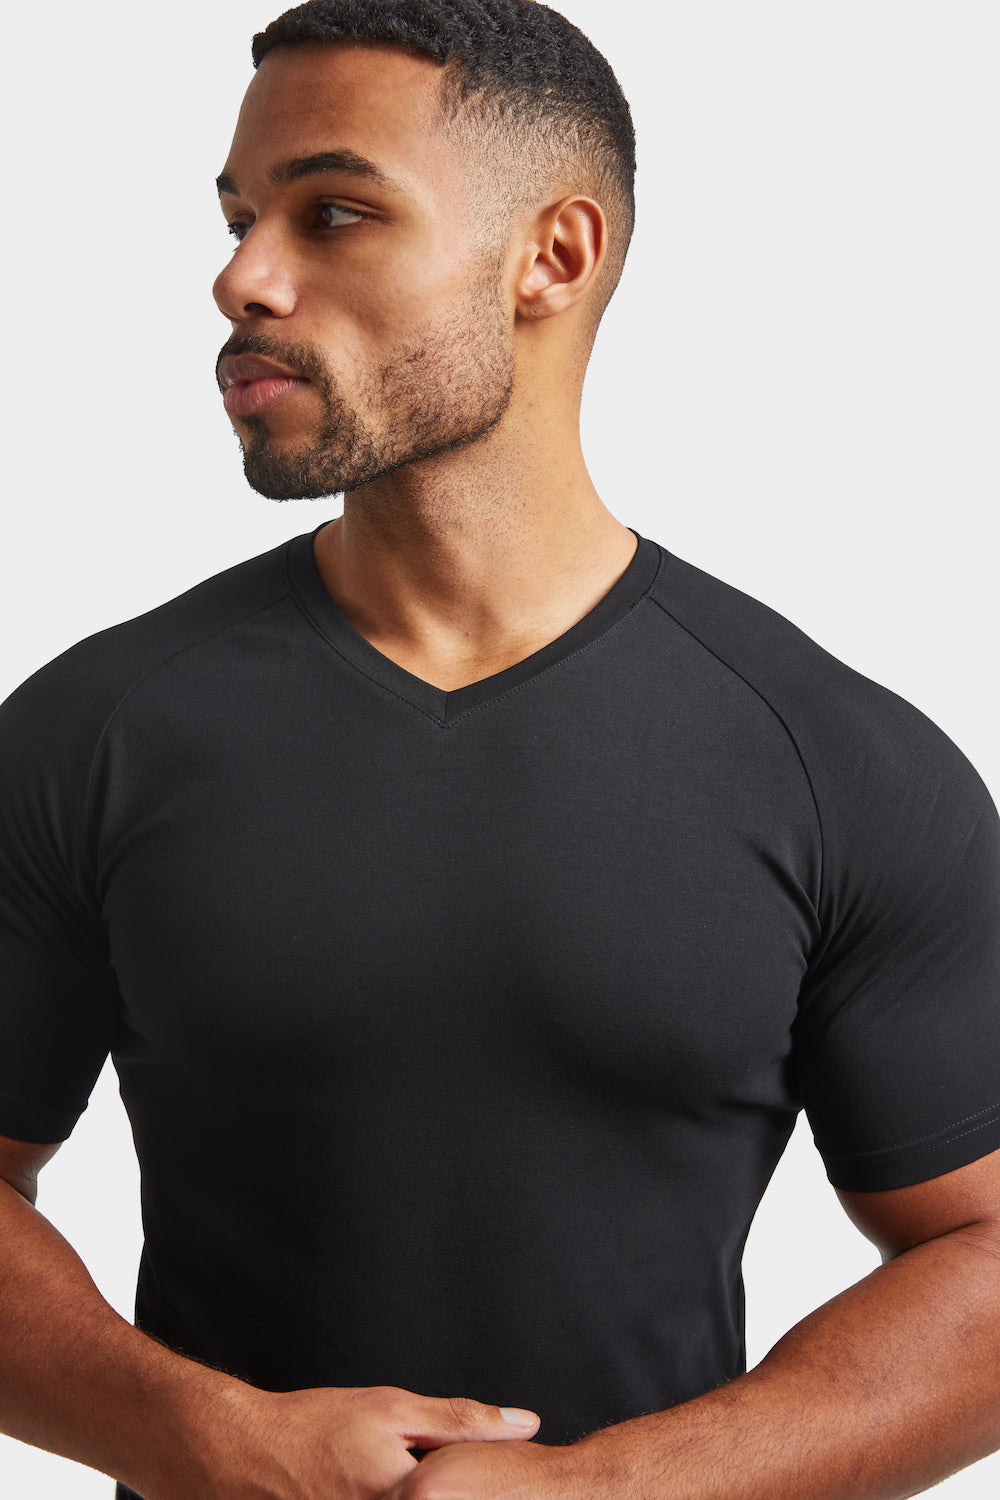 Round-neck T-shirt Regular fit - Black marl - Men